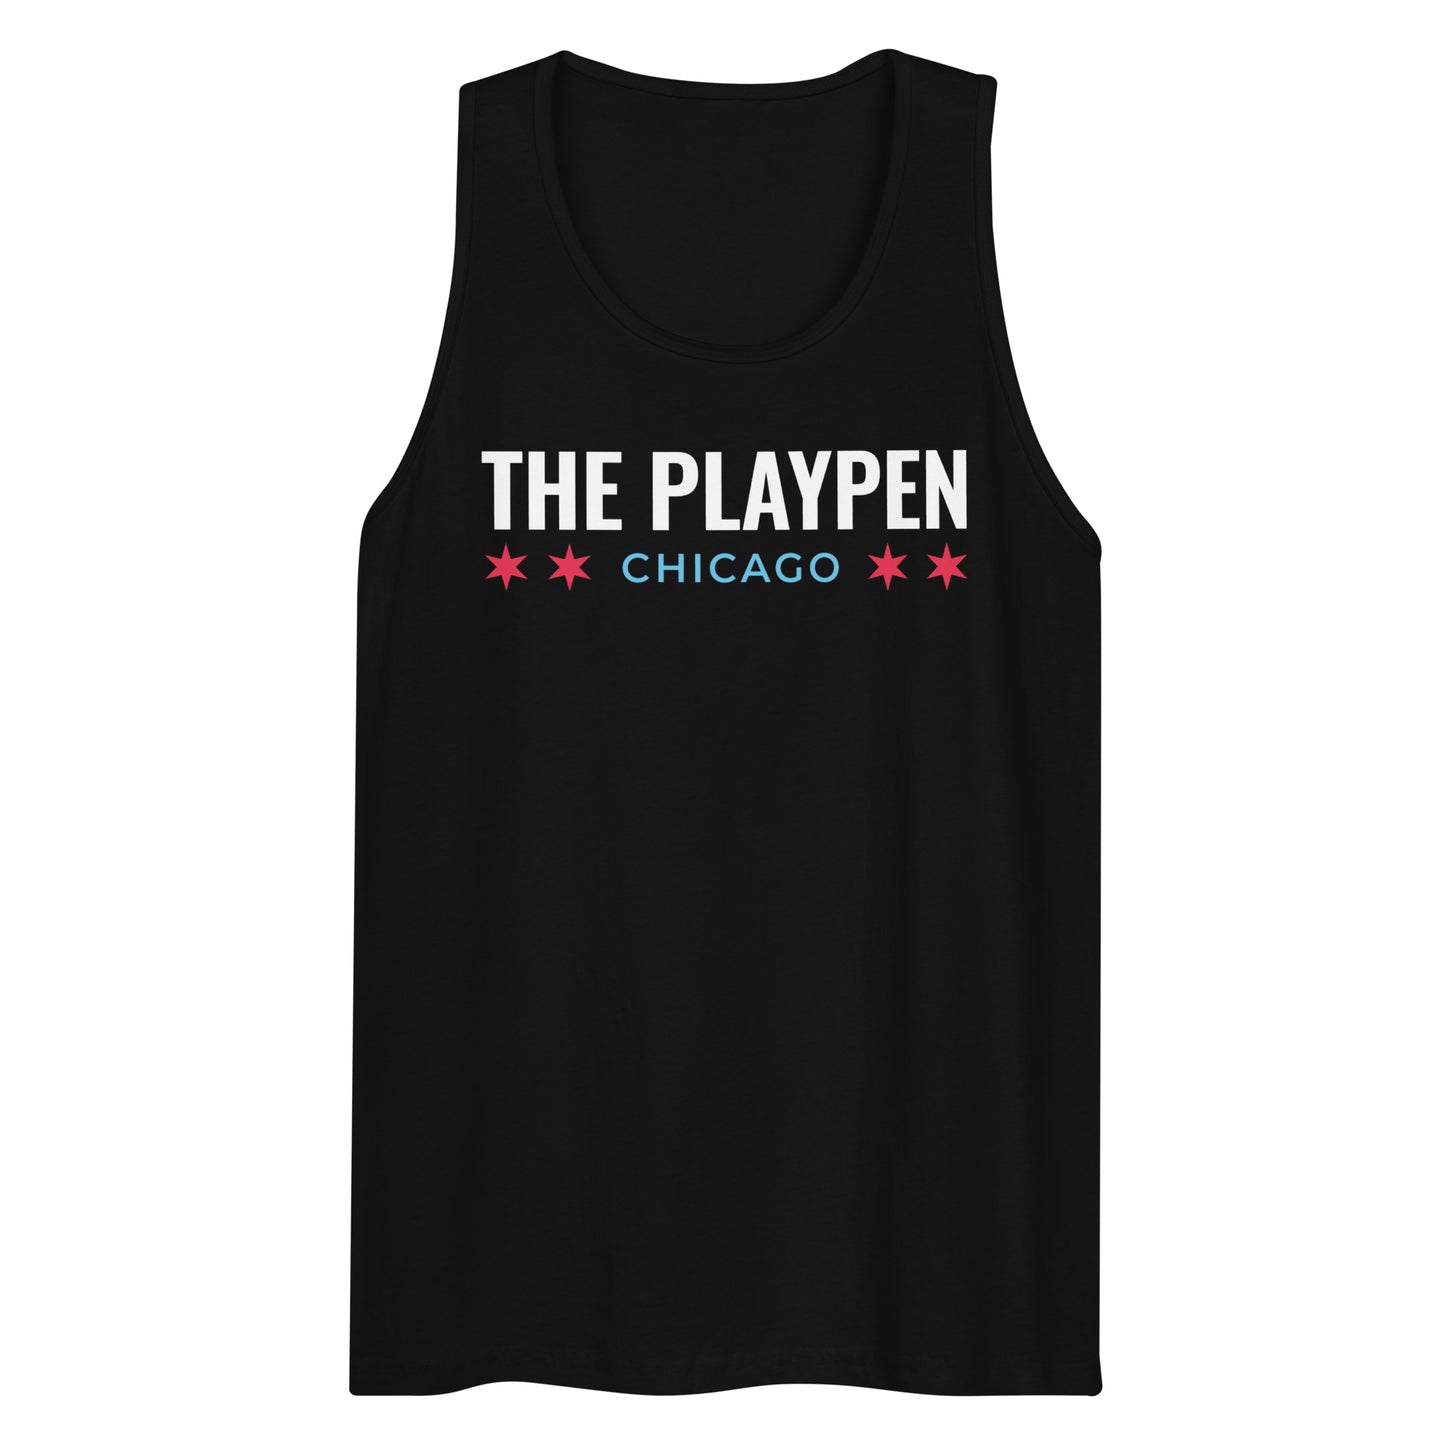 The Playpen Chicago - Black